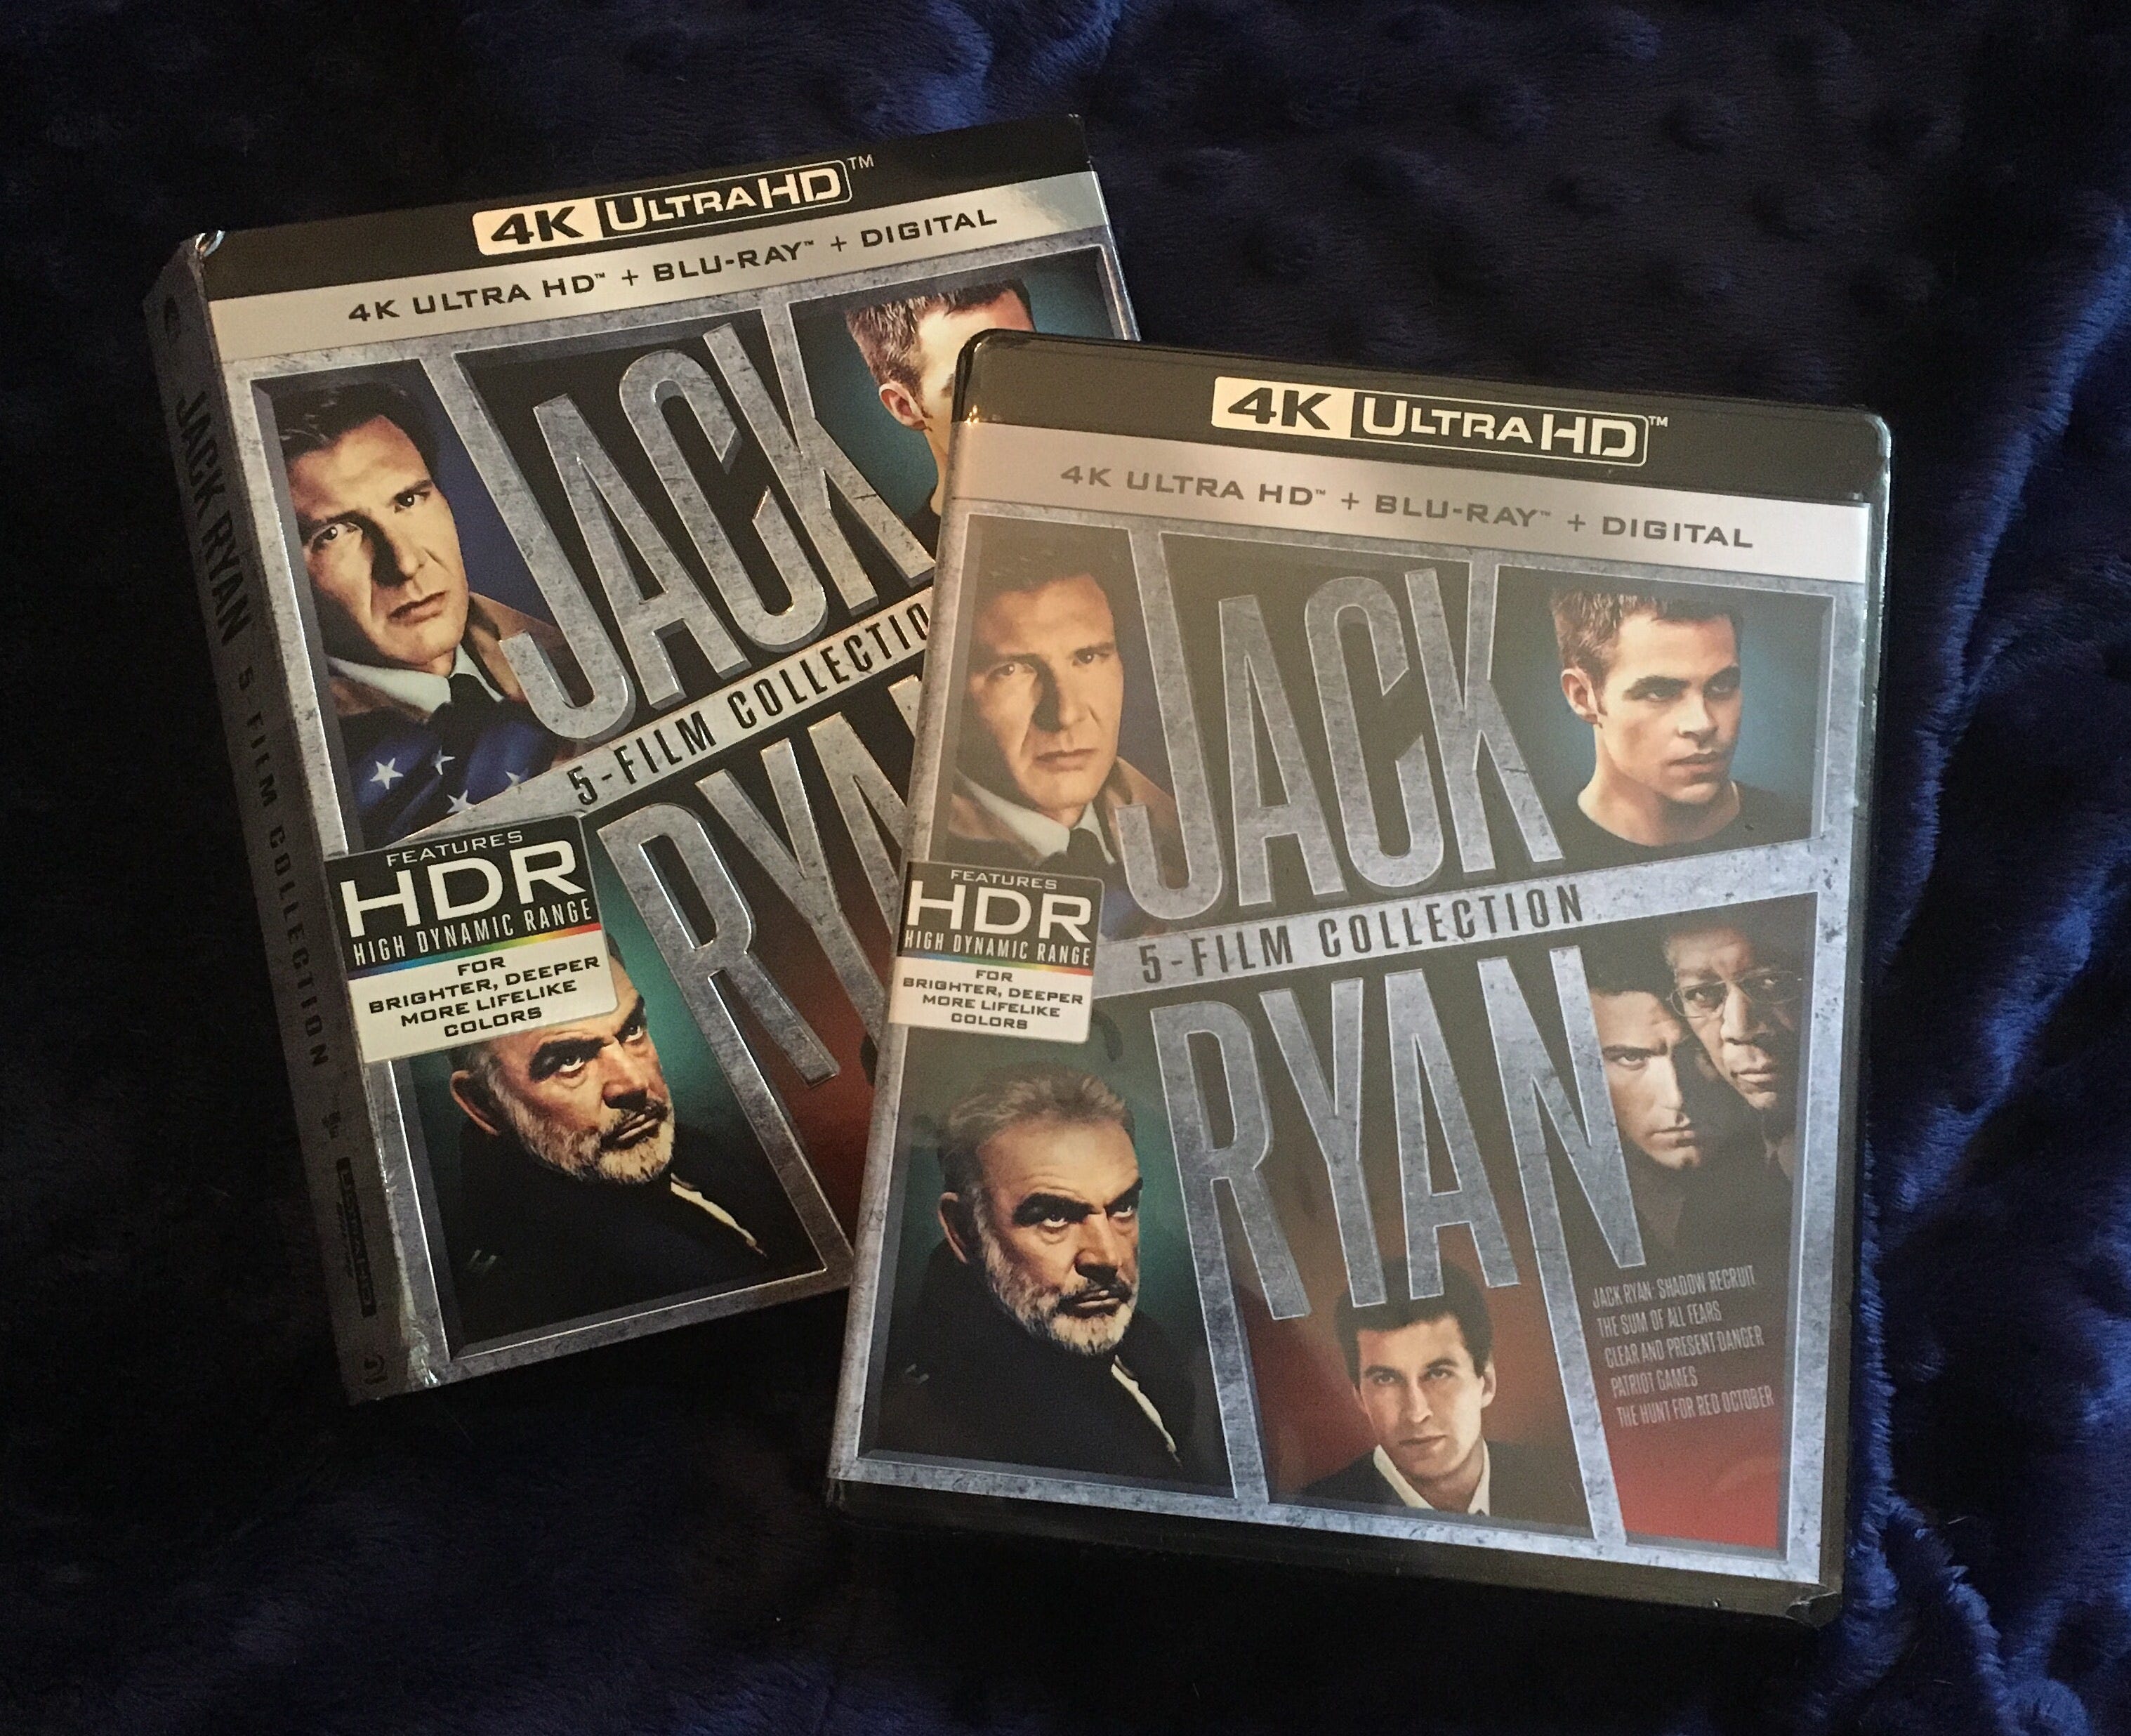 Jack Ryan: 5-Movie Collection [Includes Digital Copy] [4K Ultra HD